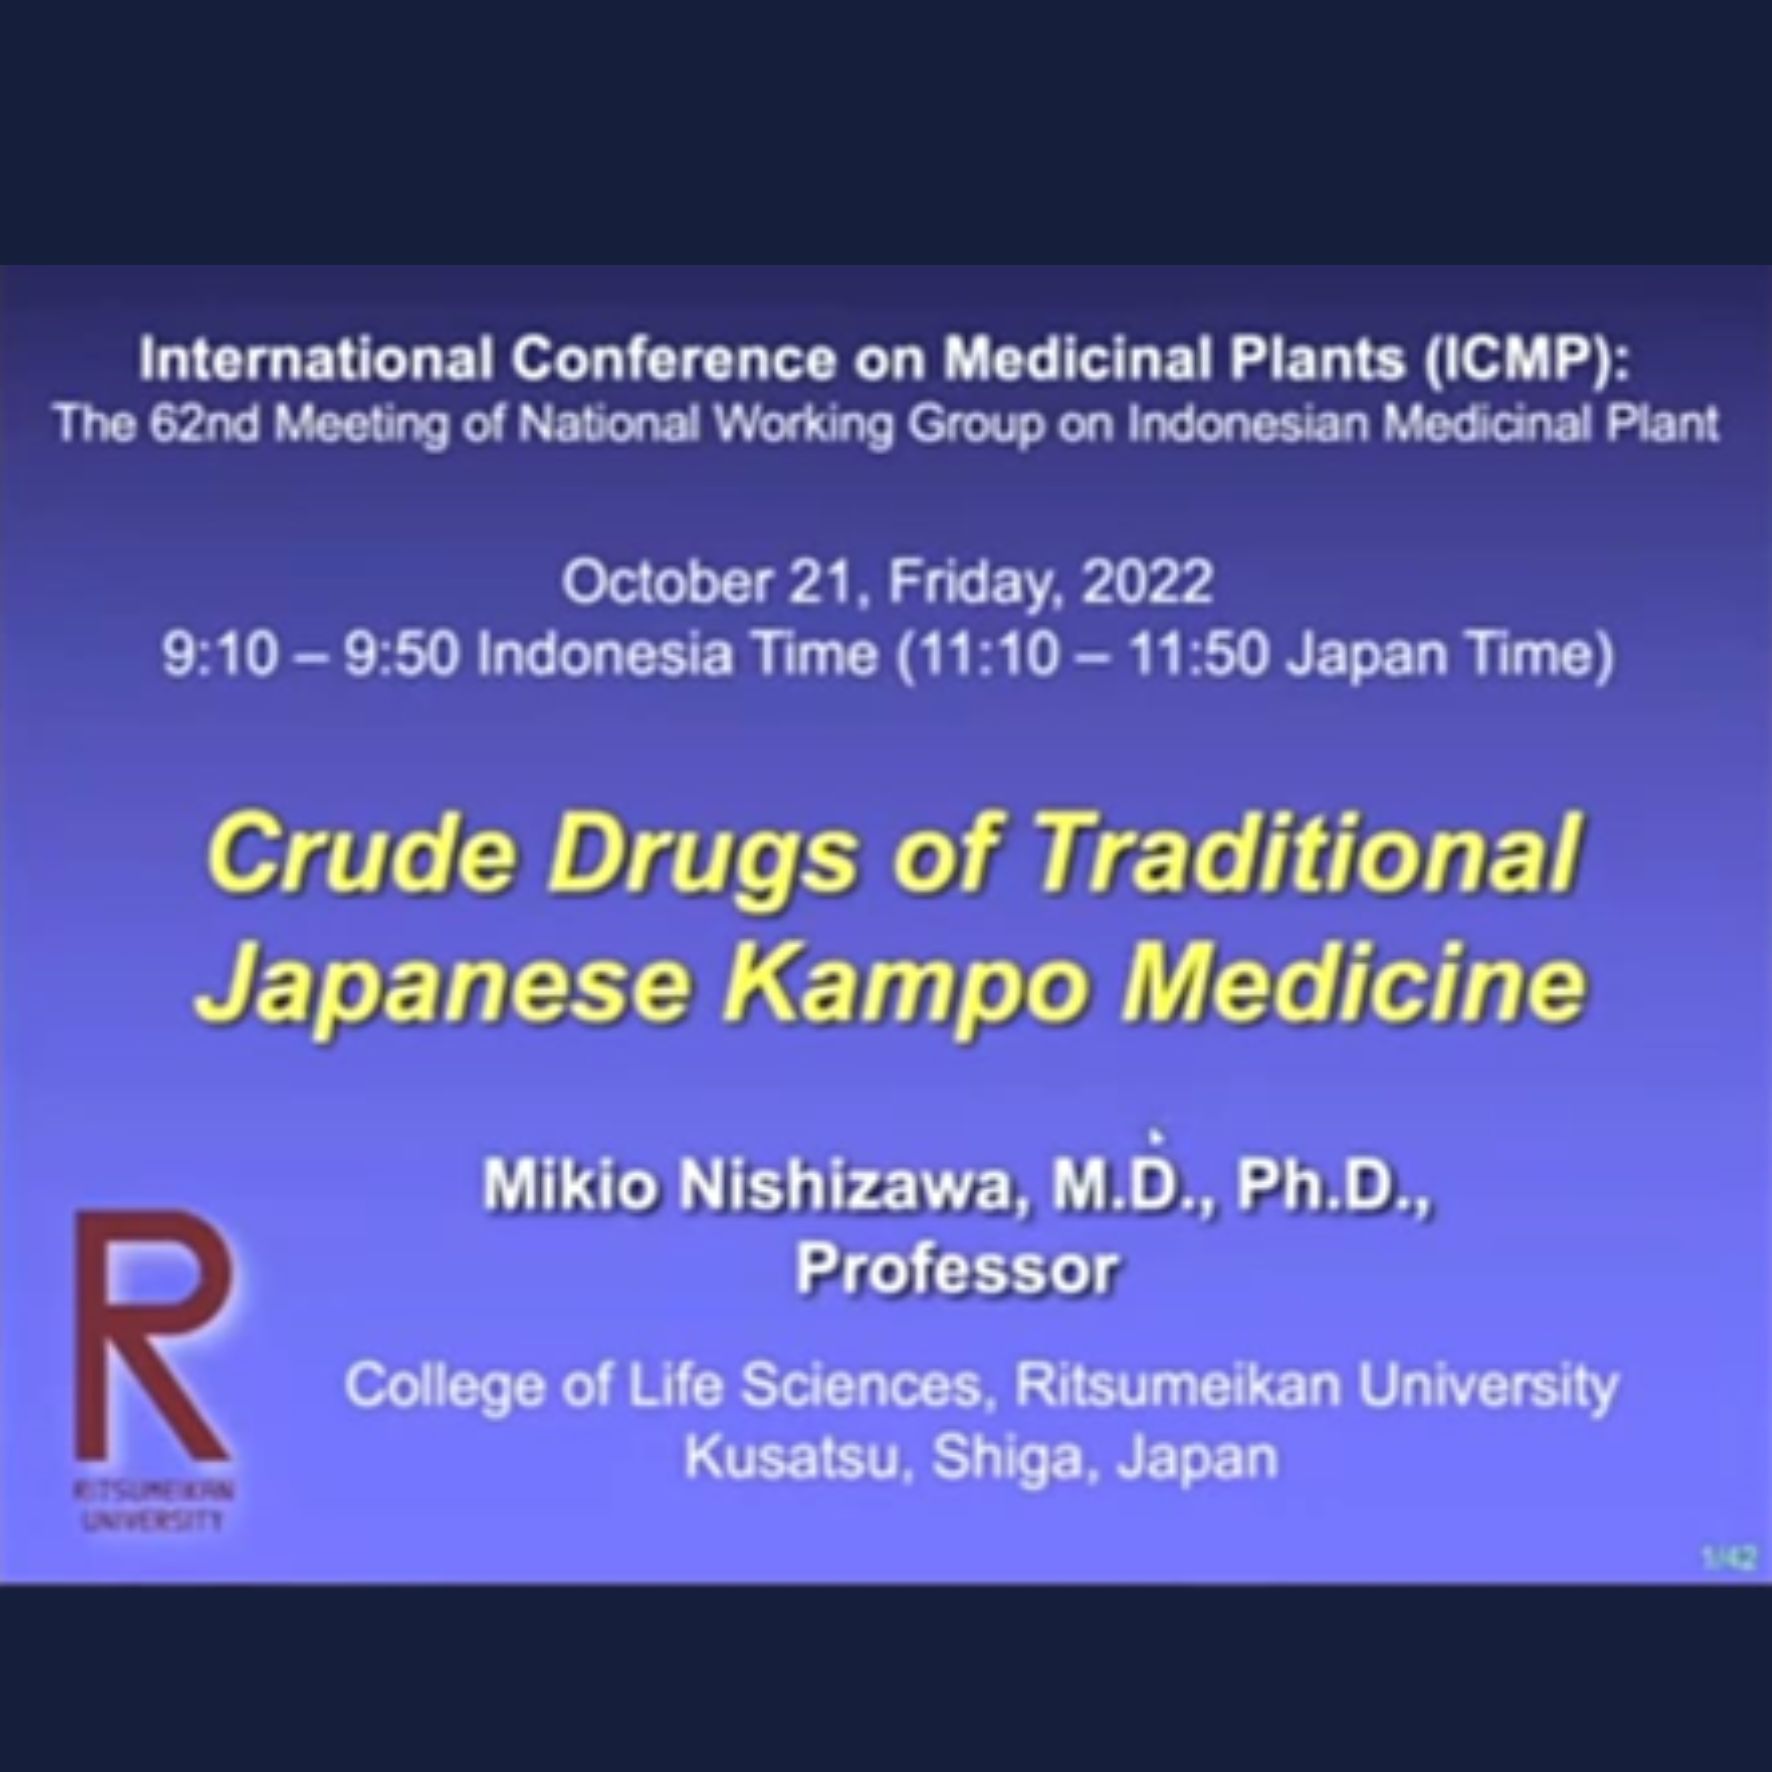 ICMP Highlight: Introduksi Obat Gubal Kampo Jepang oleh Profesor Mikio